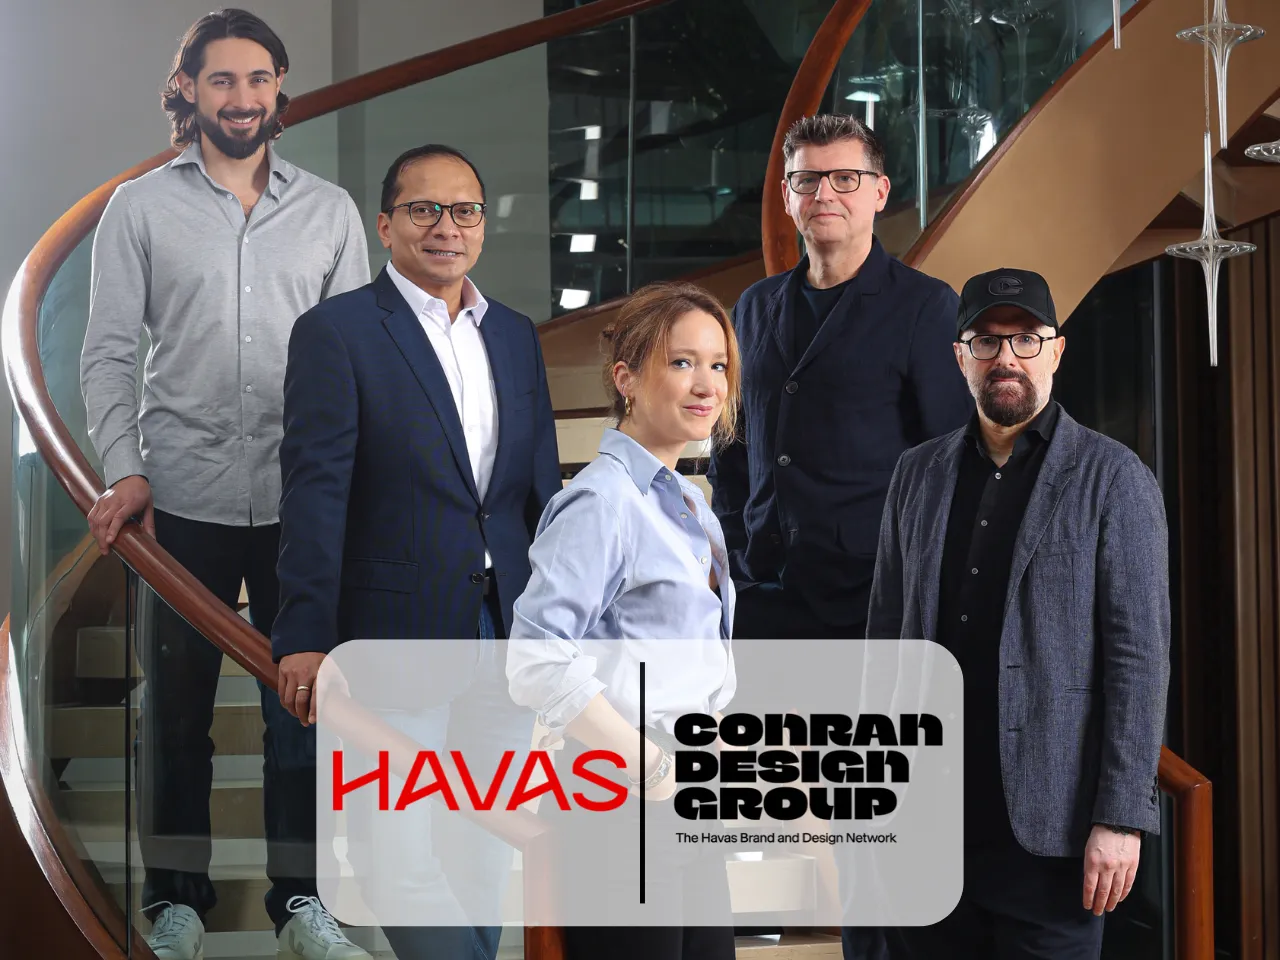 Havas launches Conran Design Group network